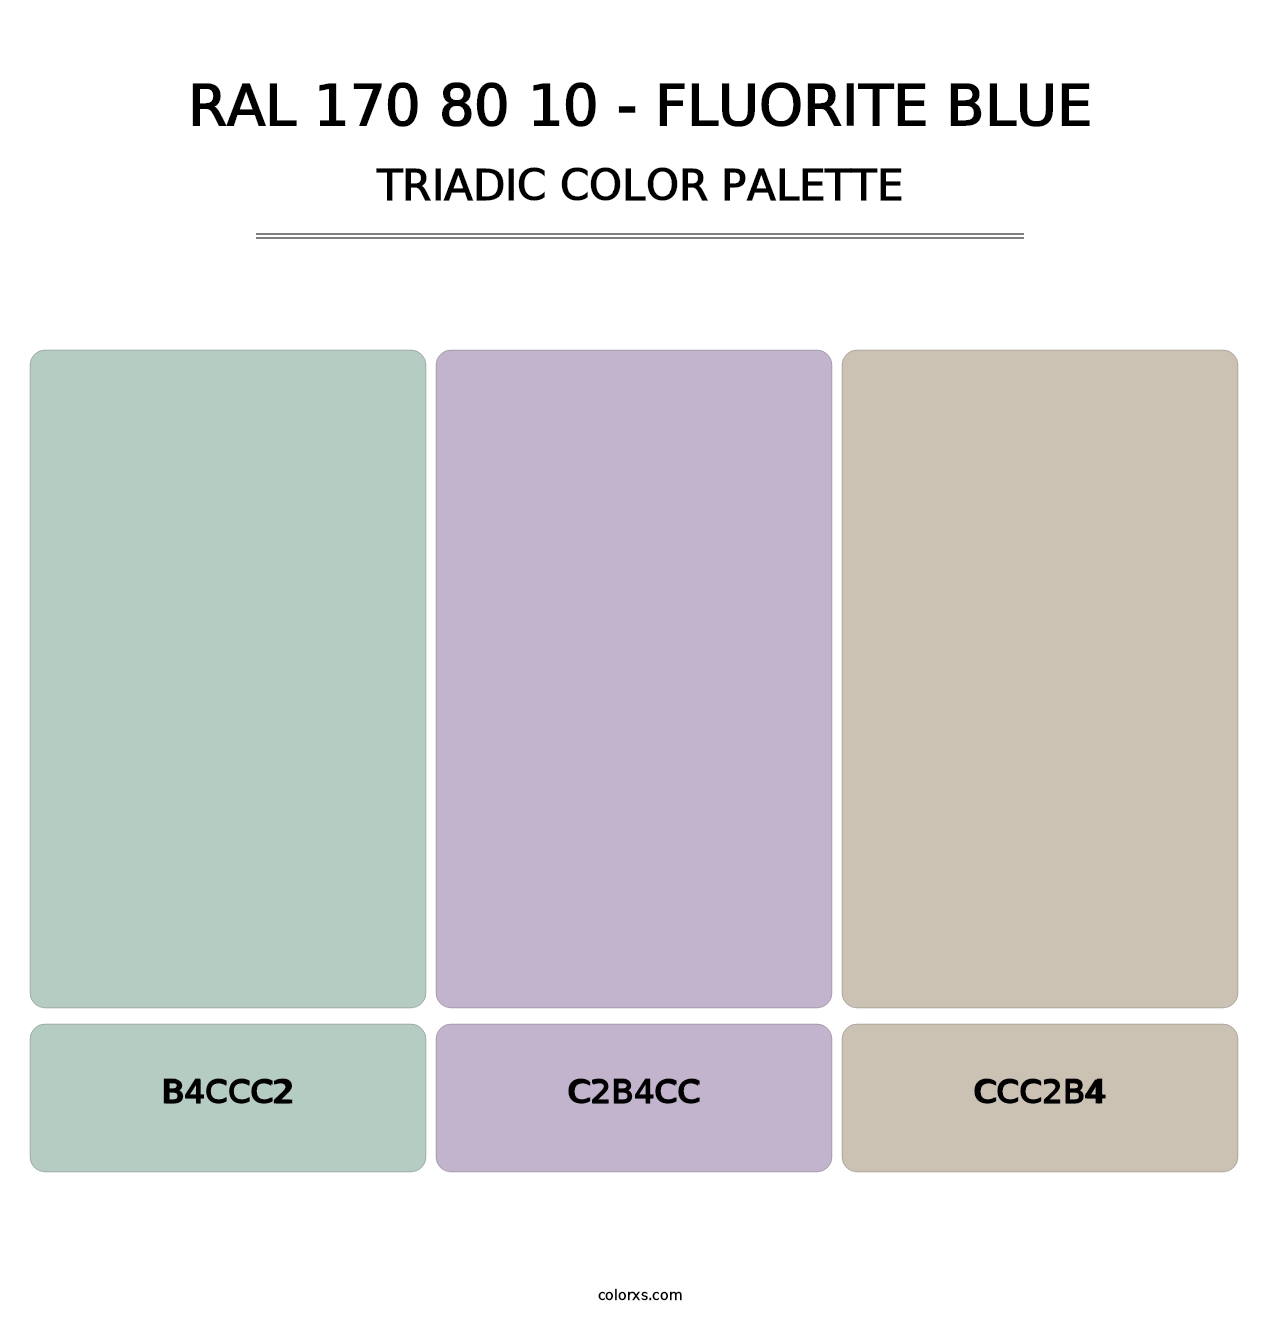 RAL 170 80 10 - Fluorite Blue - Triadic Color Palette